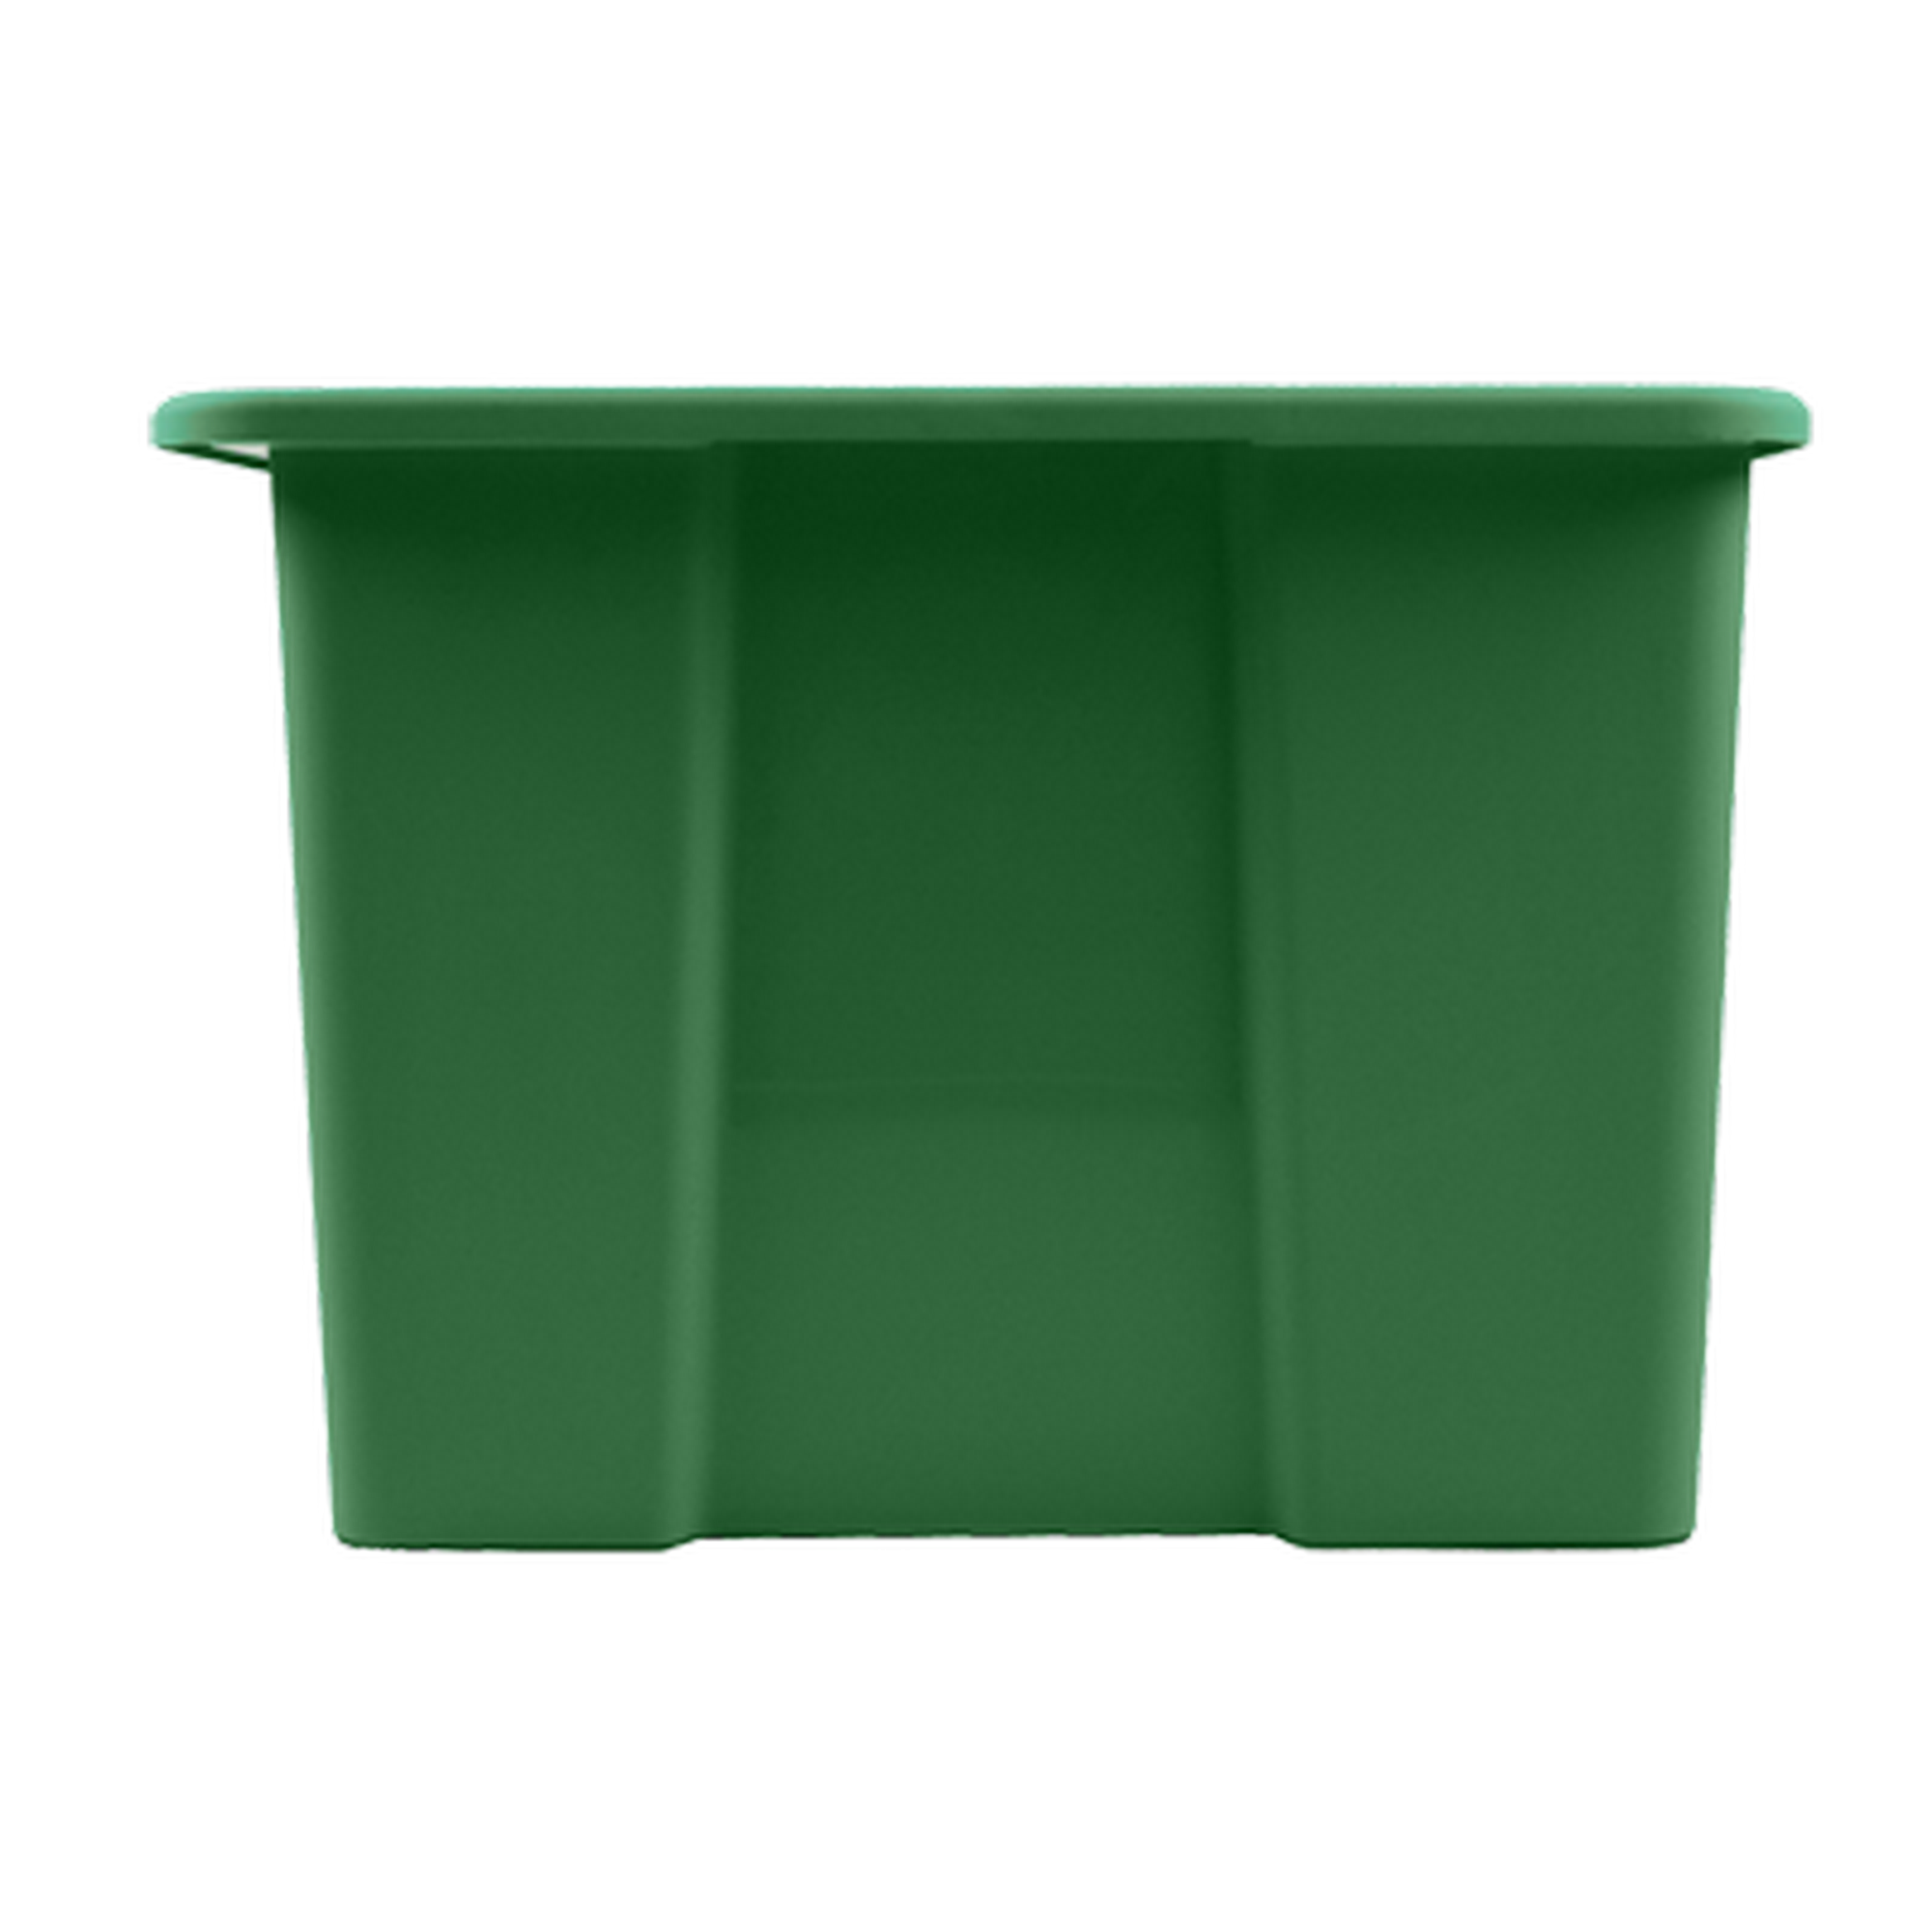 Aufbewahrungsbox 'Unibox' grün 39 x 29 x 20 cm, 15 l + product picture